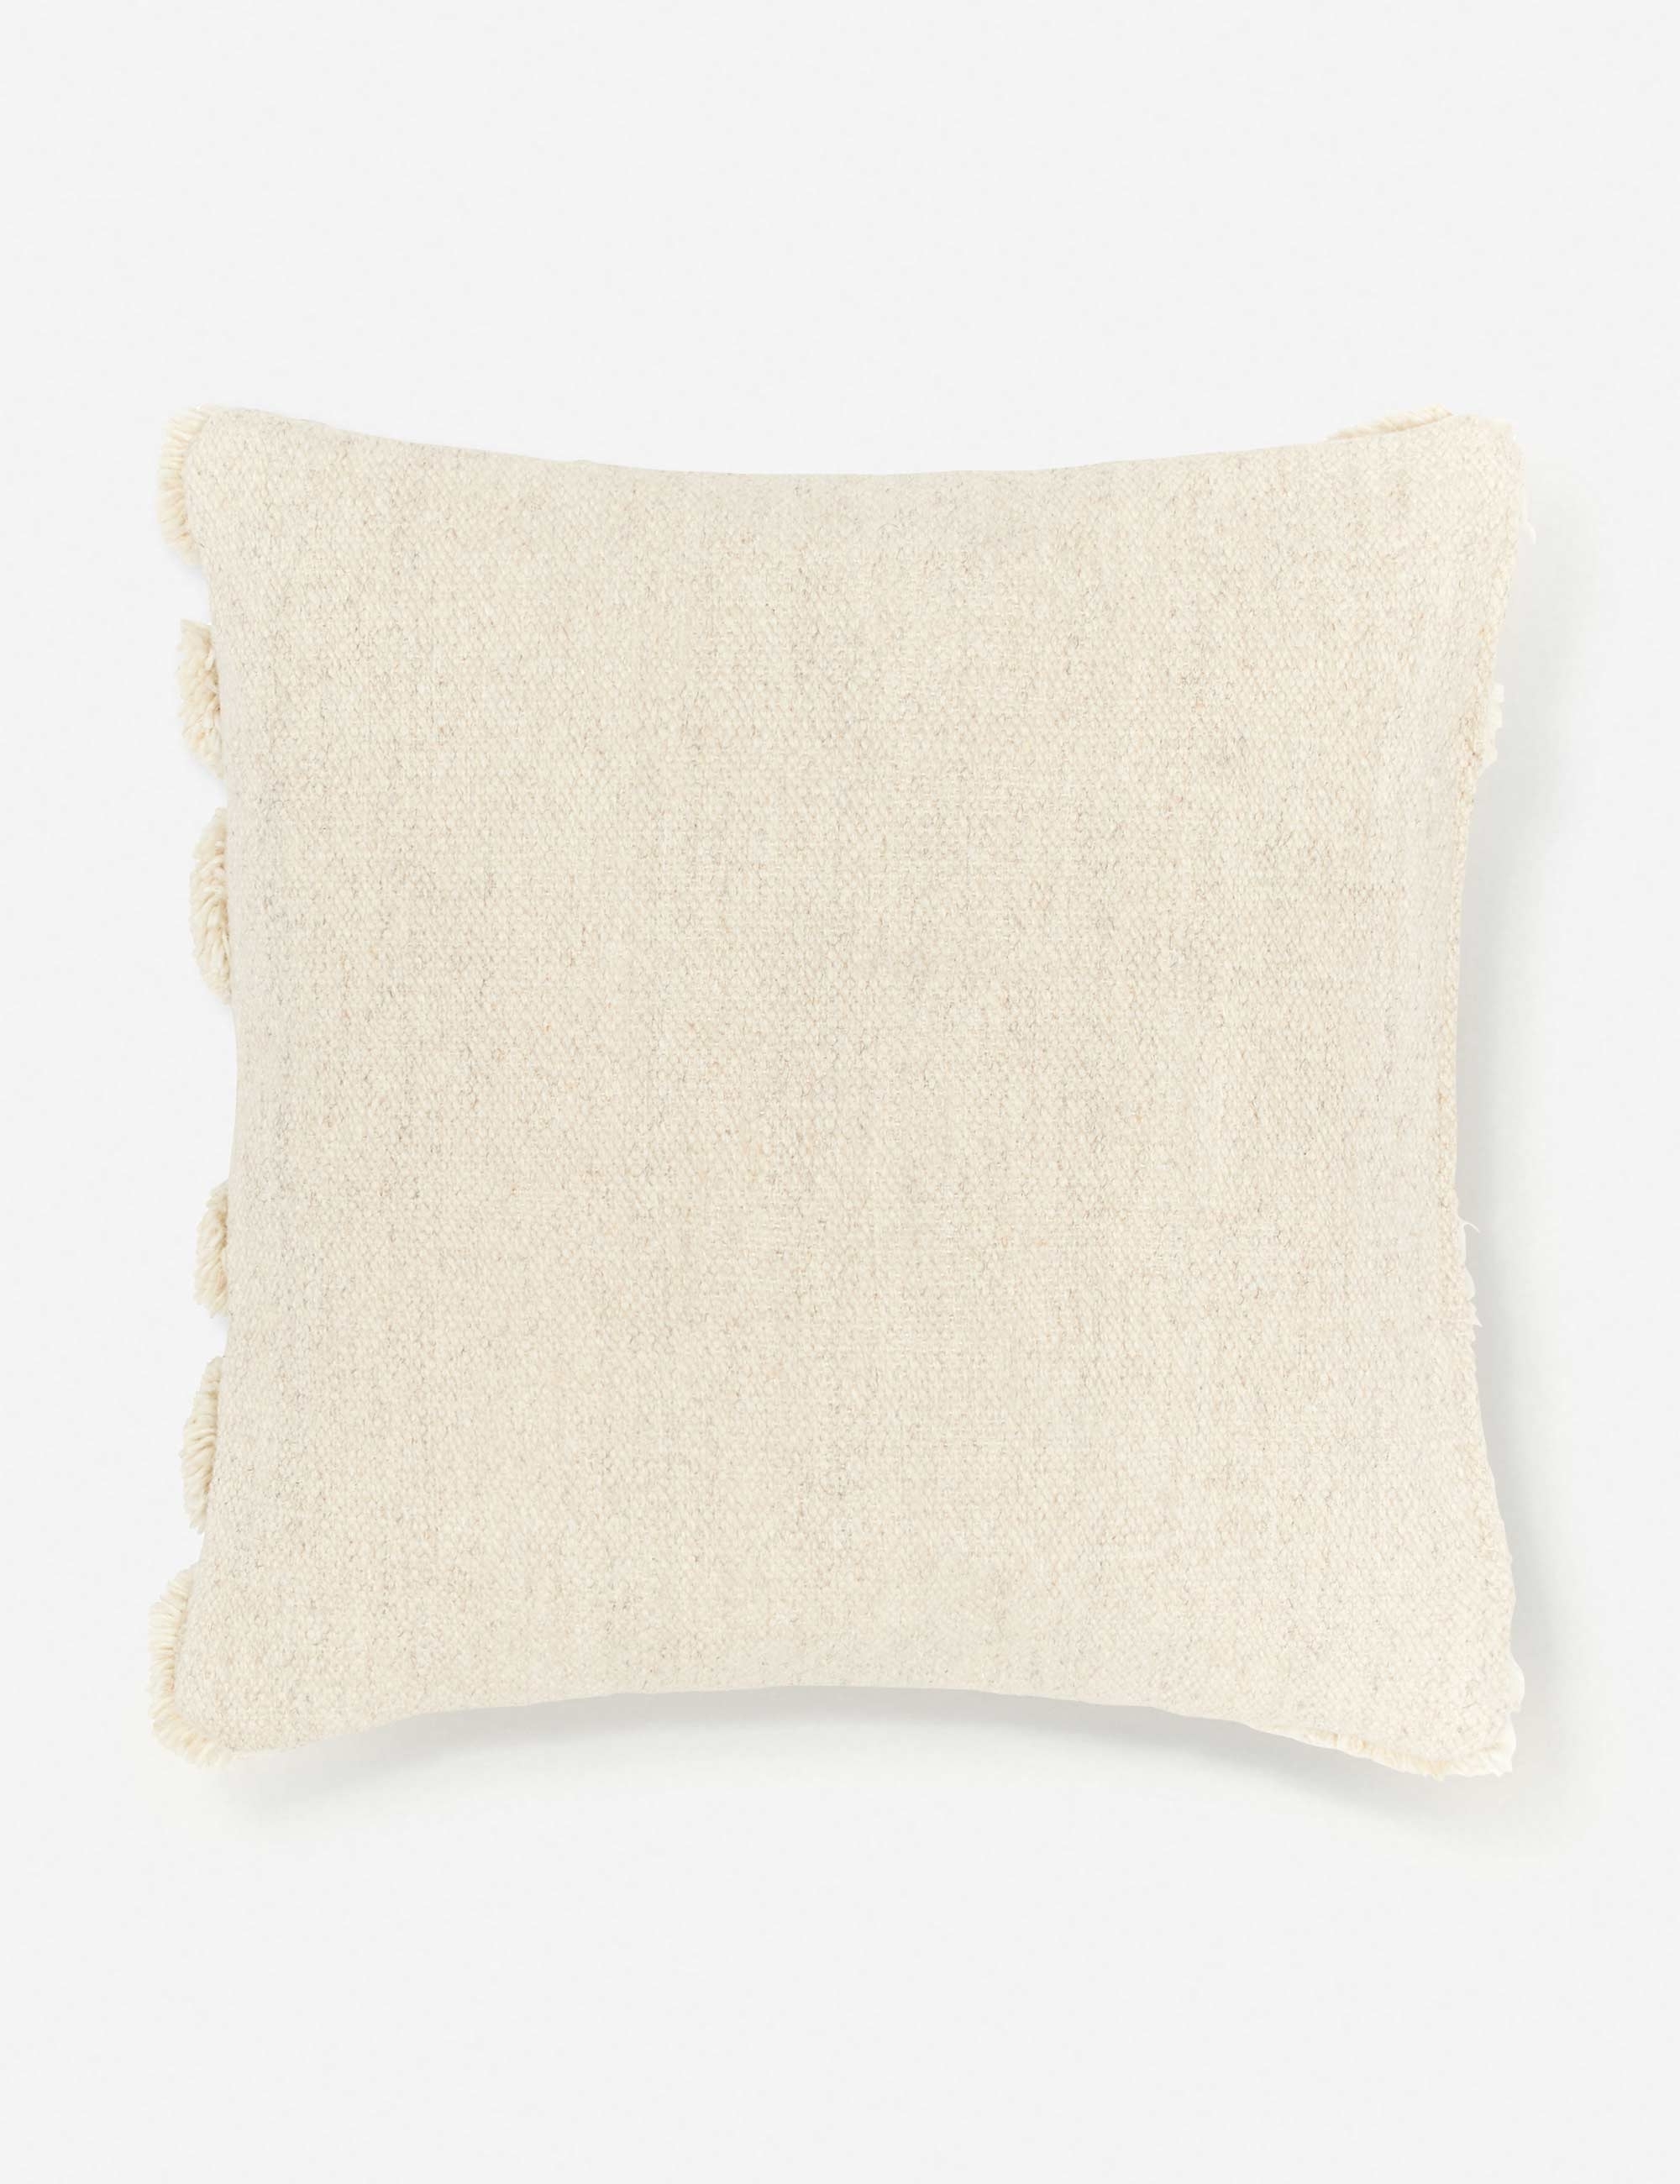 Arches Pillow, Natural By Sarah Sherman Samuel - Image 6